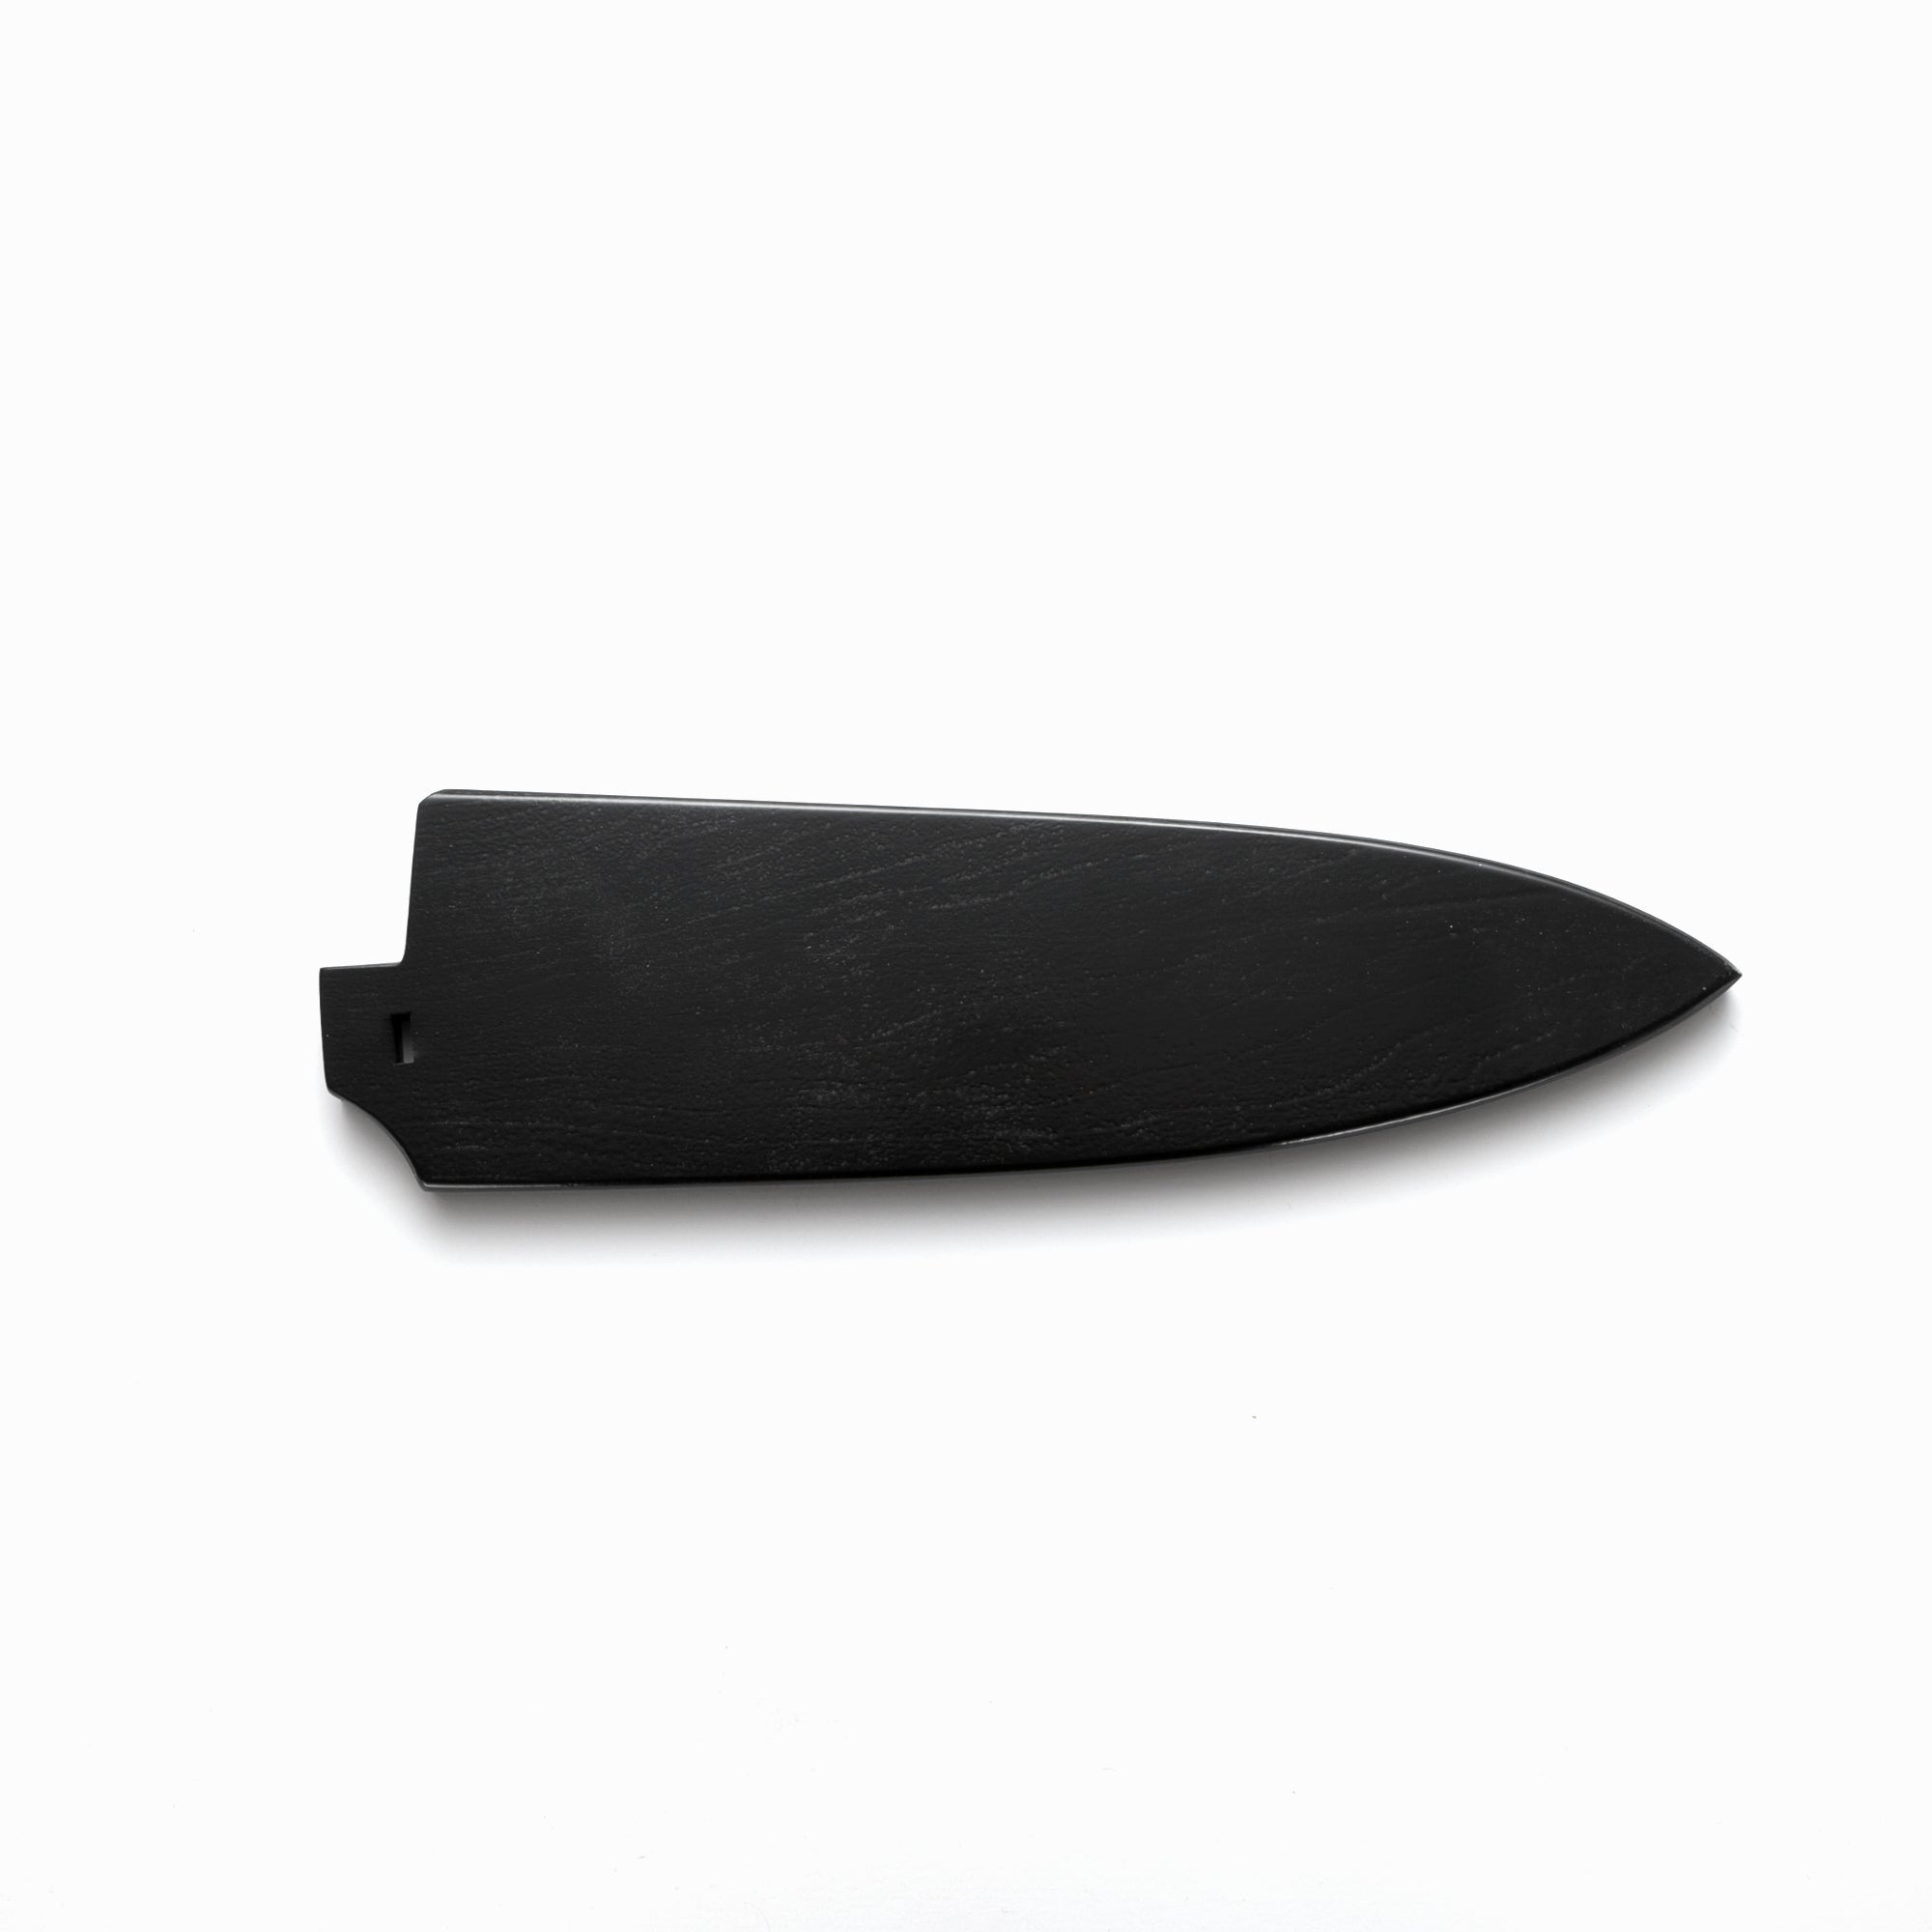 Black wood saya knife sheath for Town Cutler Desert Dawn and Olneya 8.5" chef knife.